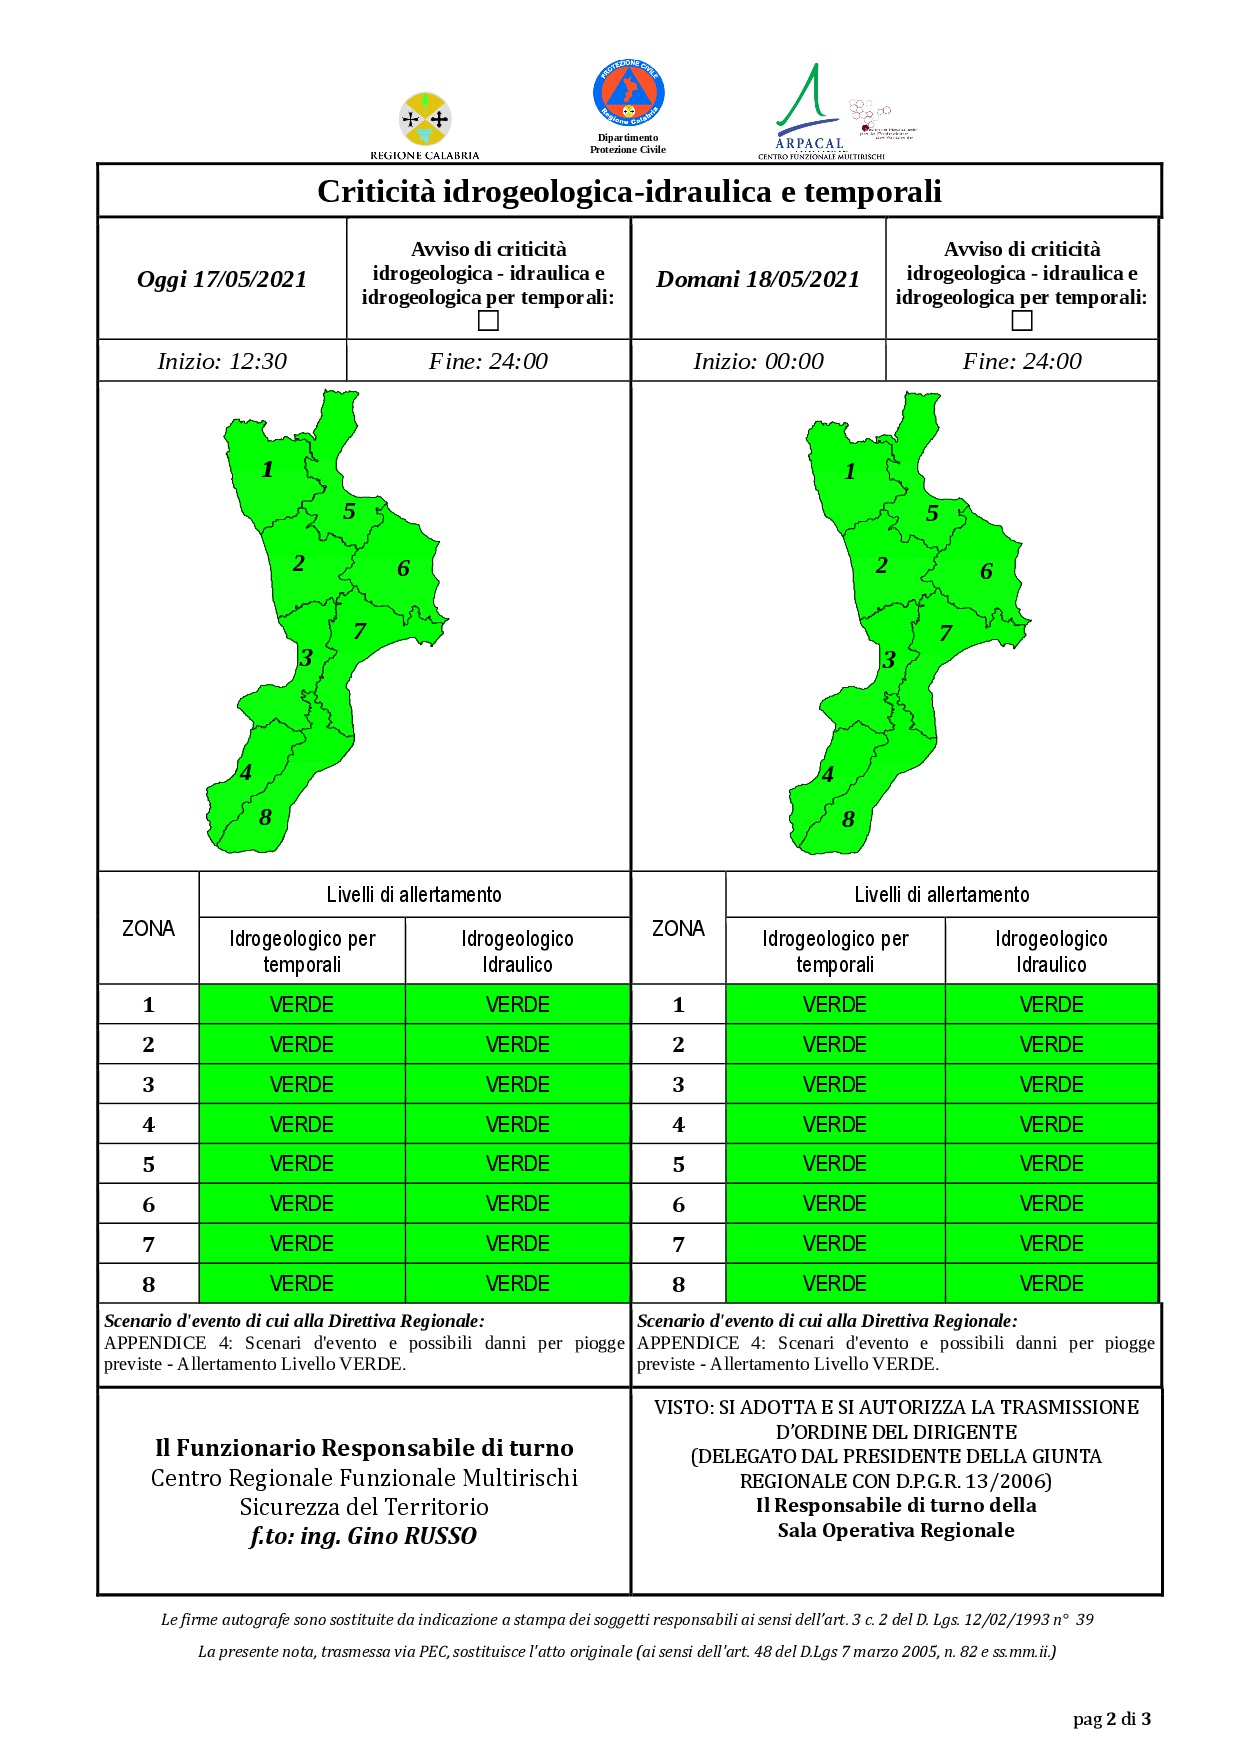 Criticità idrogeologica-idraulica e temporali in Calabria 17-05-2021